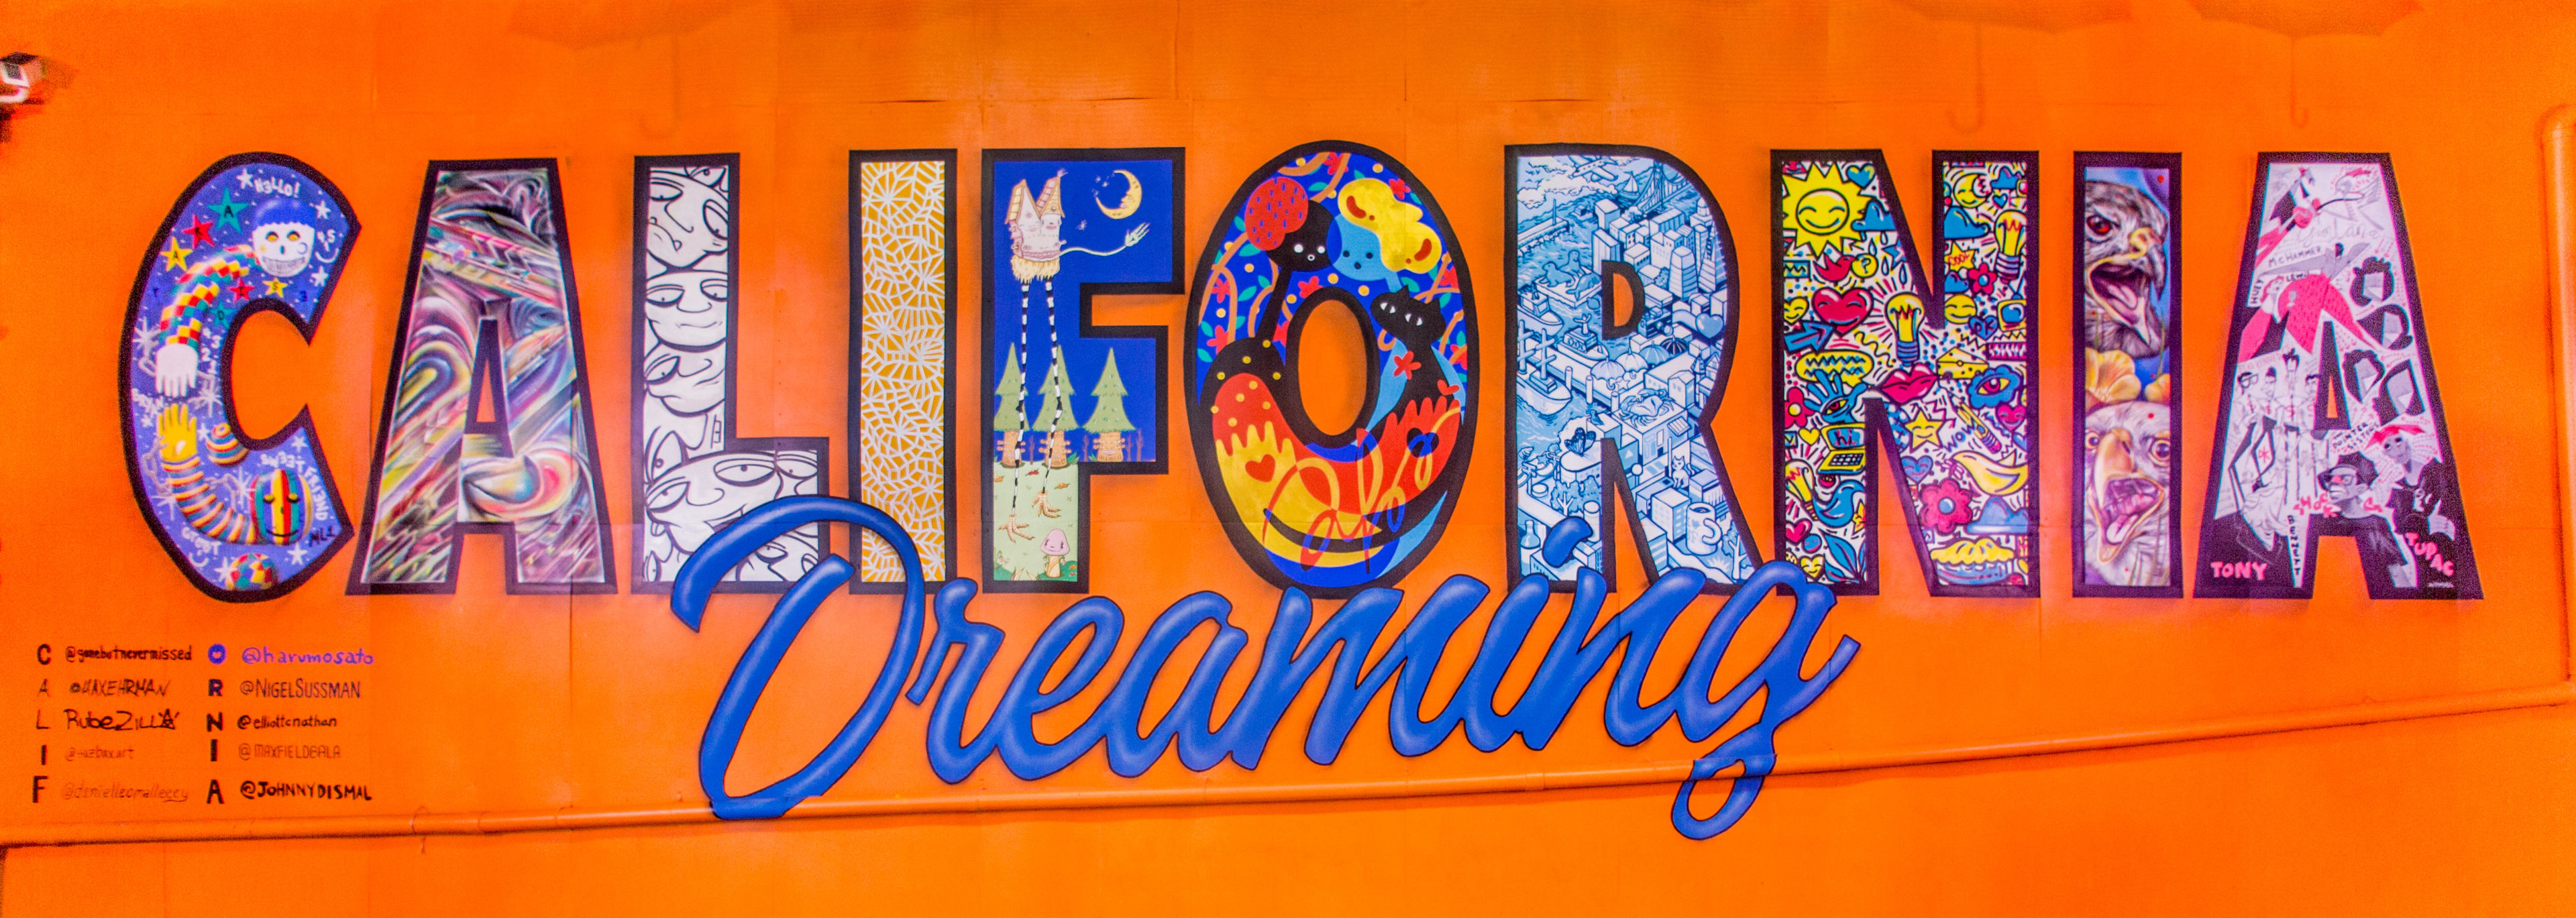 Une murale colorée disant "California Dreaming" dans Umbrella Alley, Oakland, CA